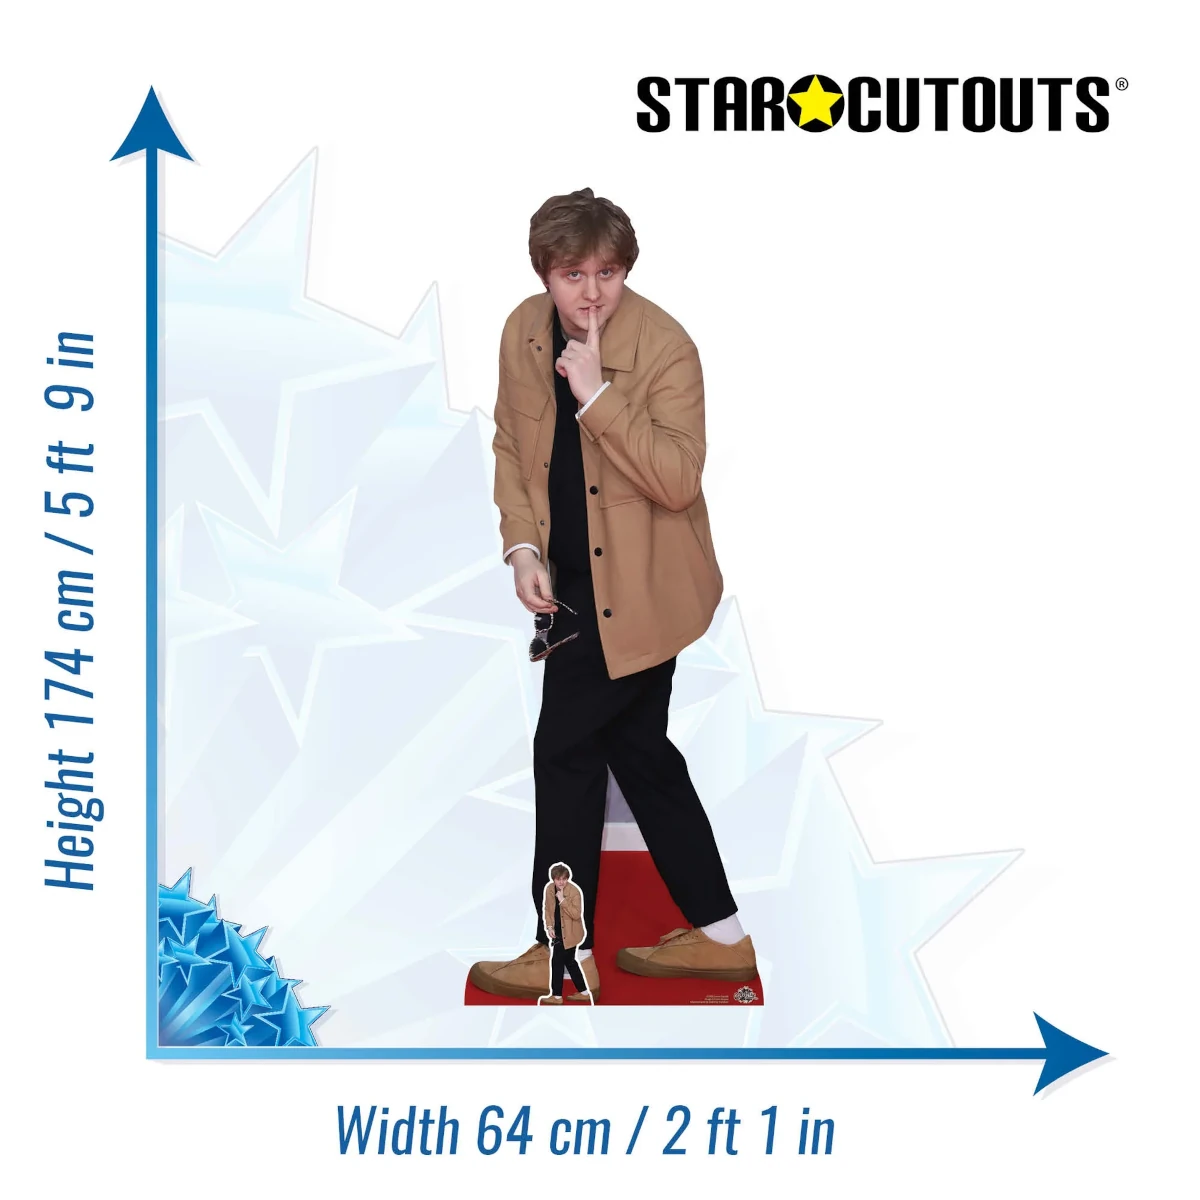 CS800 Lewis Capaldi (Scottish SingerSongwriter) Lifesize + Mini Cardboard Cutout Standee Size